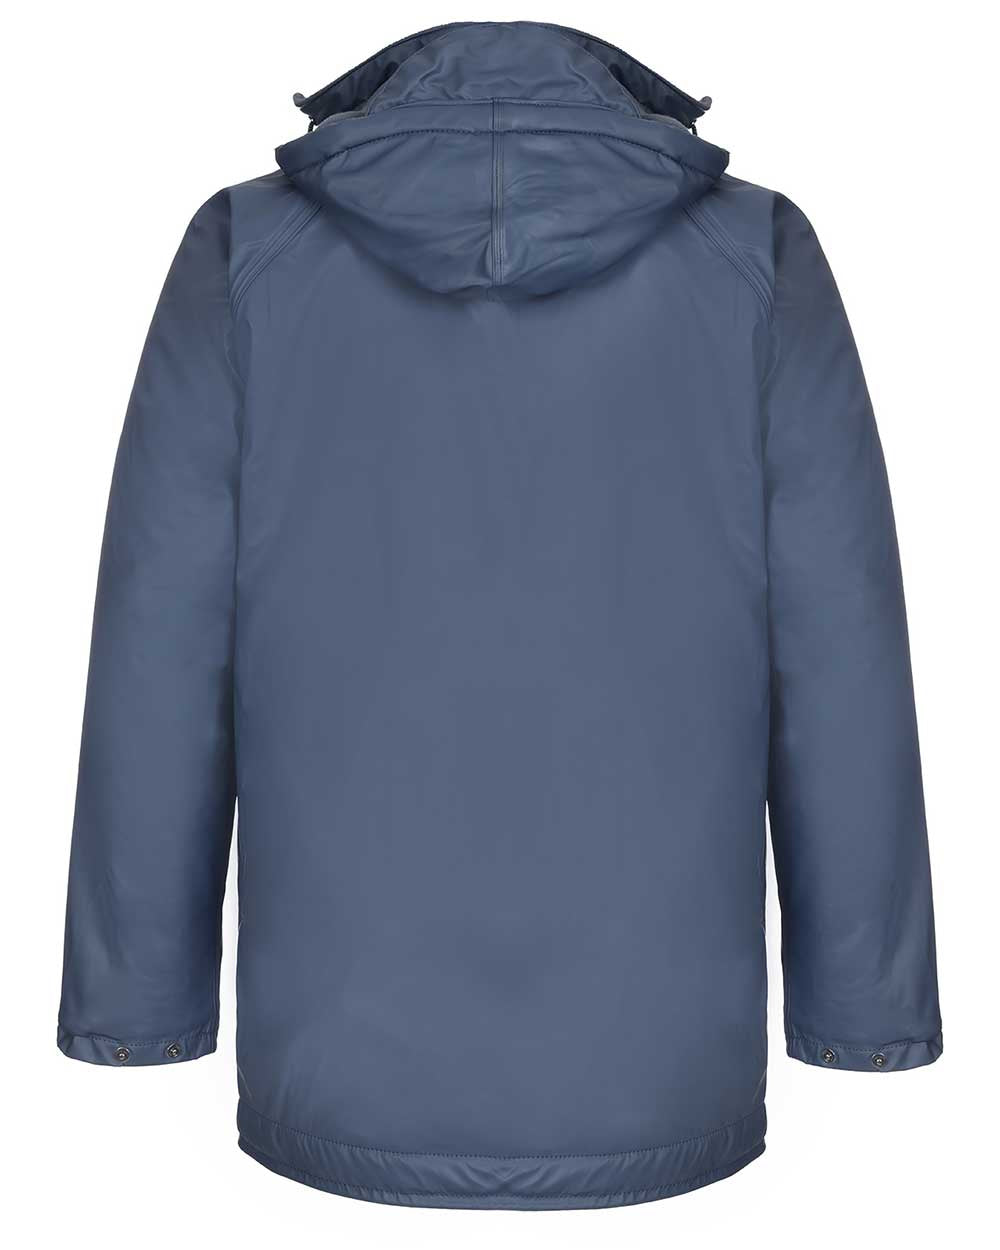 Navy Blue coloured Fort Fortex Flex Waterproof Fleece Lined Jacket on white background 